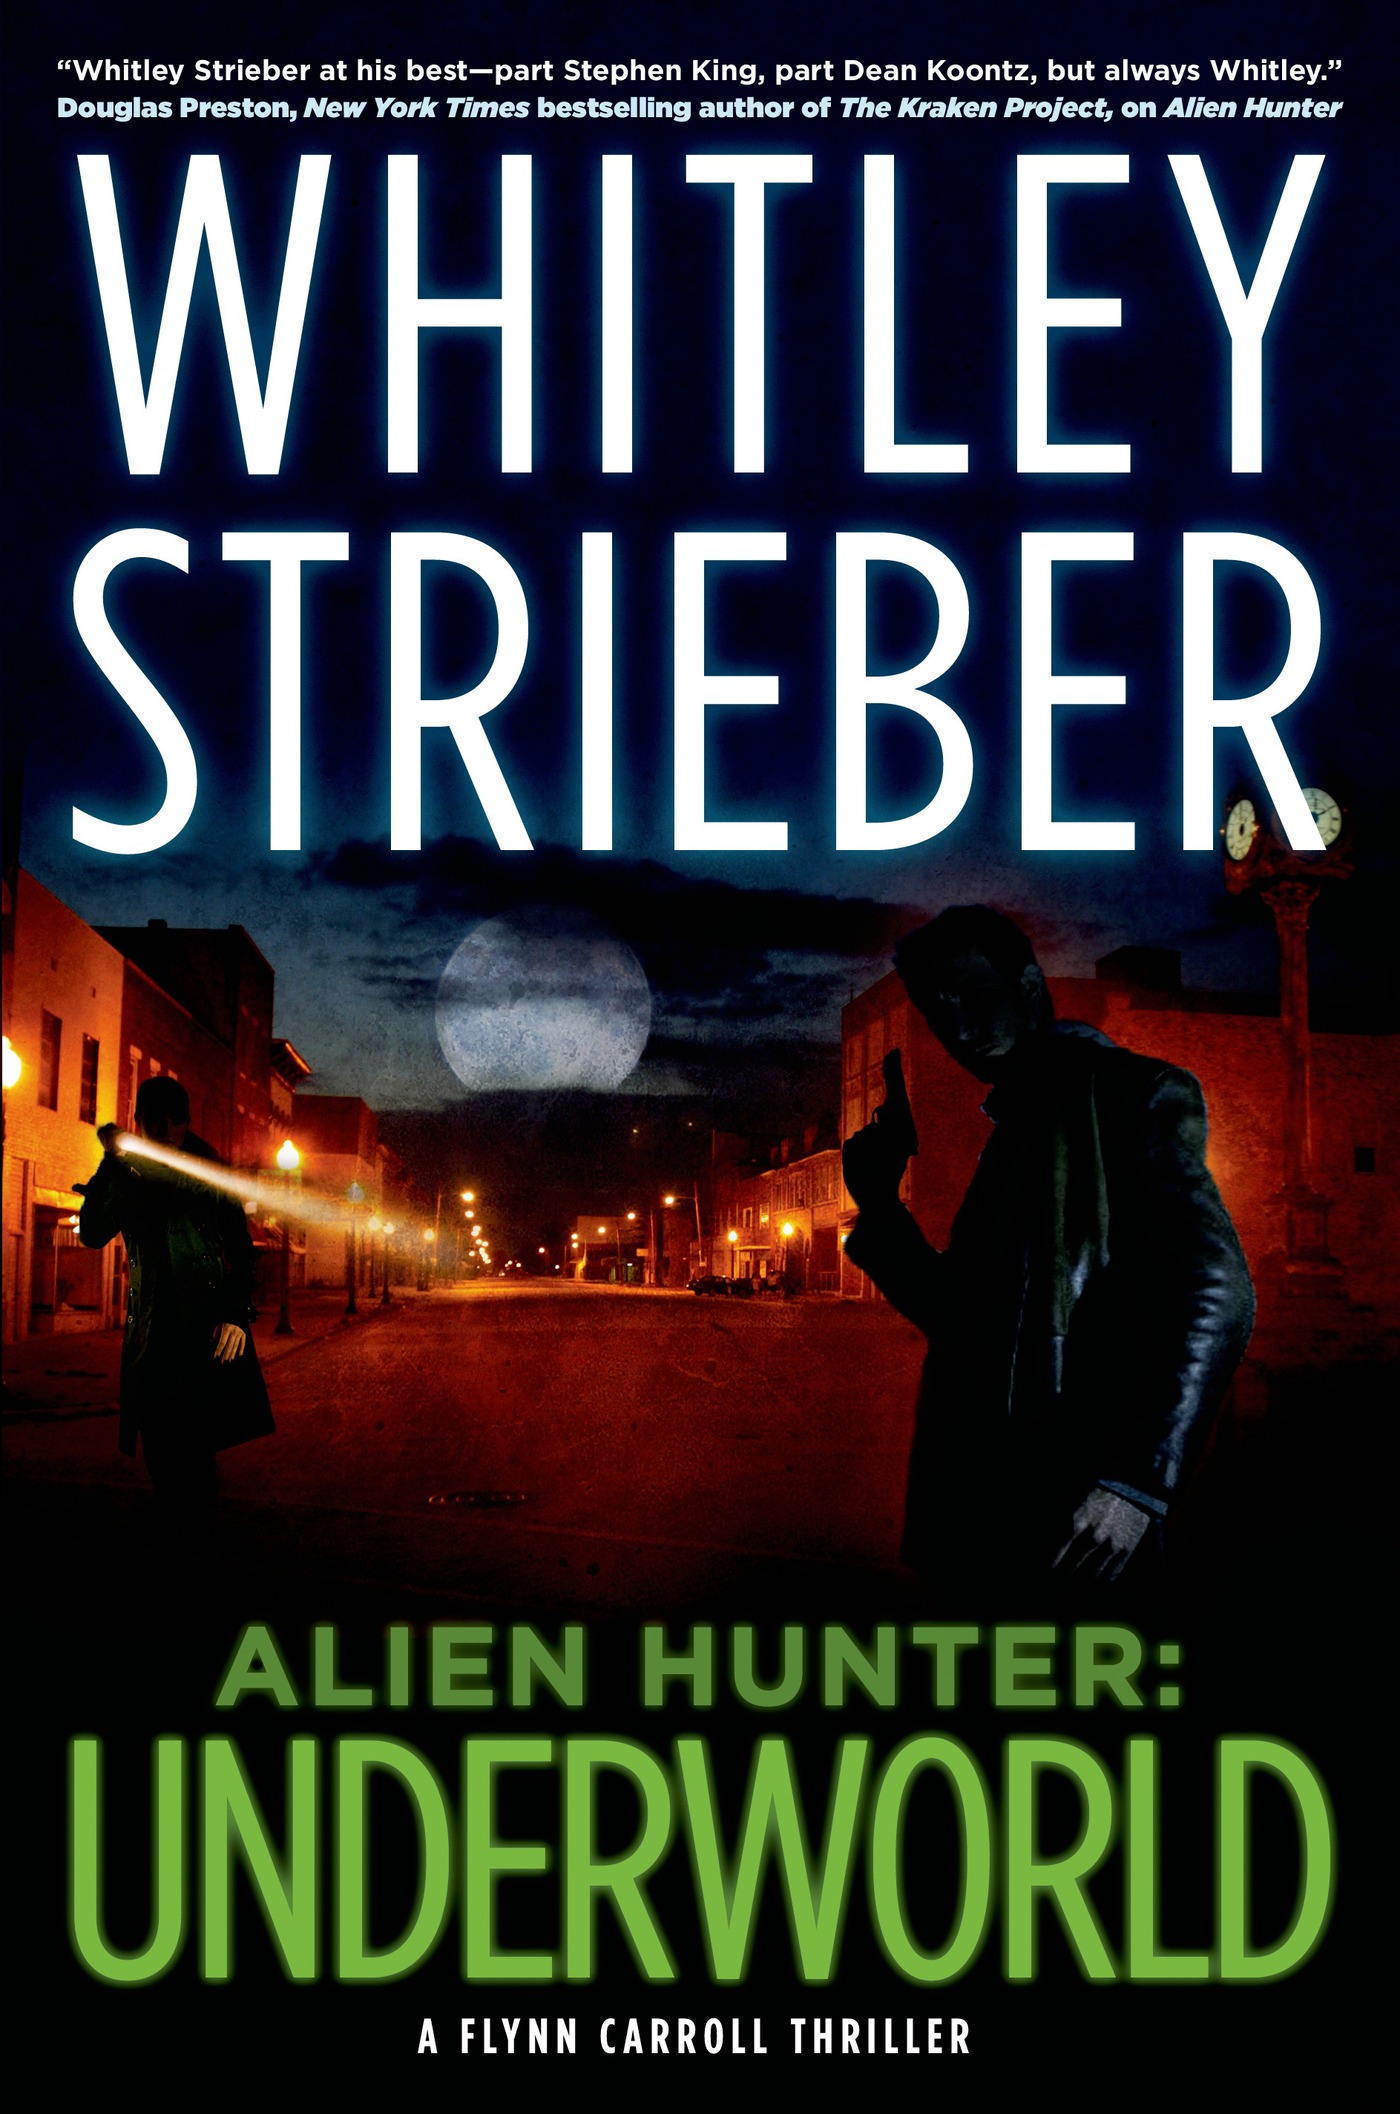 Alien Hunter: Underworld : A Flynn Carroll Thriller by Whitley Strieber